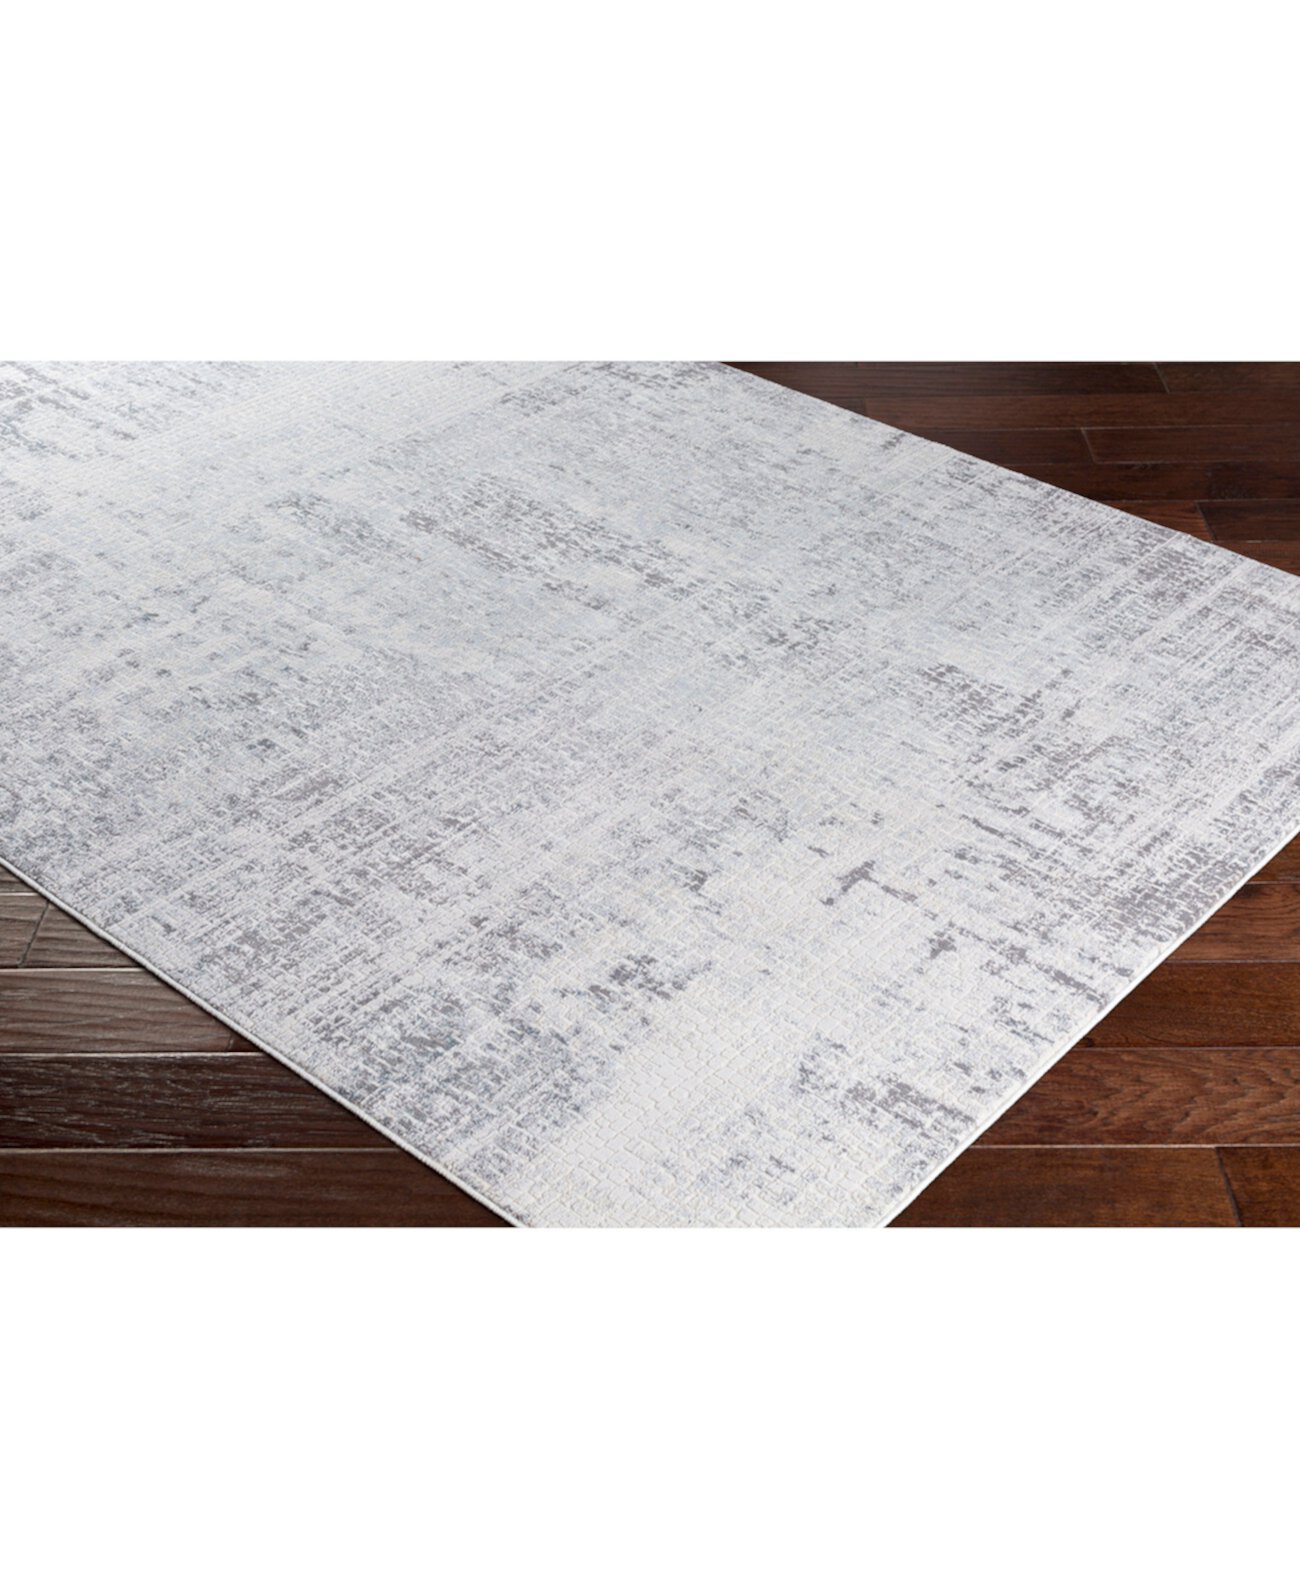 Genesis GNS-2306 Серебристо-серый коврик размером 2 фута x 2 фута 11 дюймов Surya